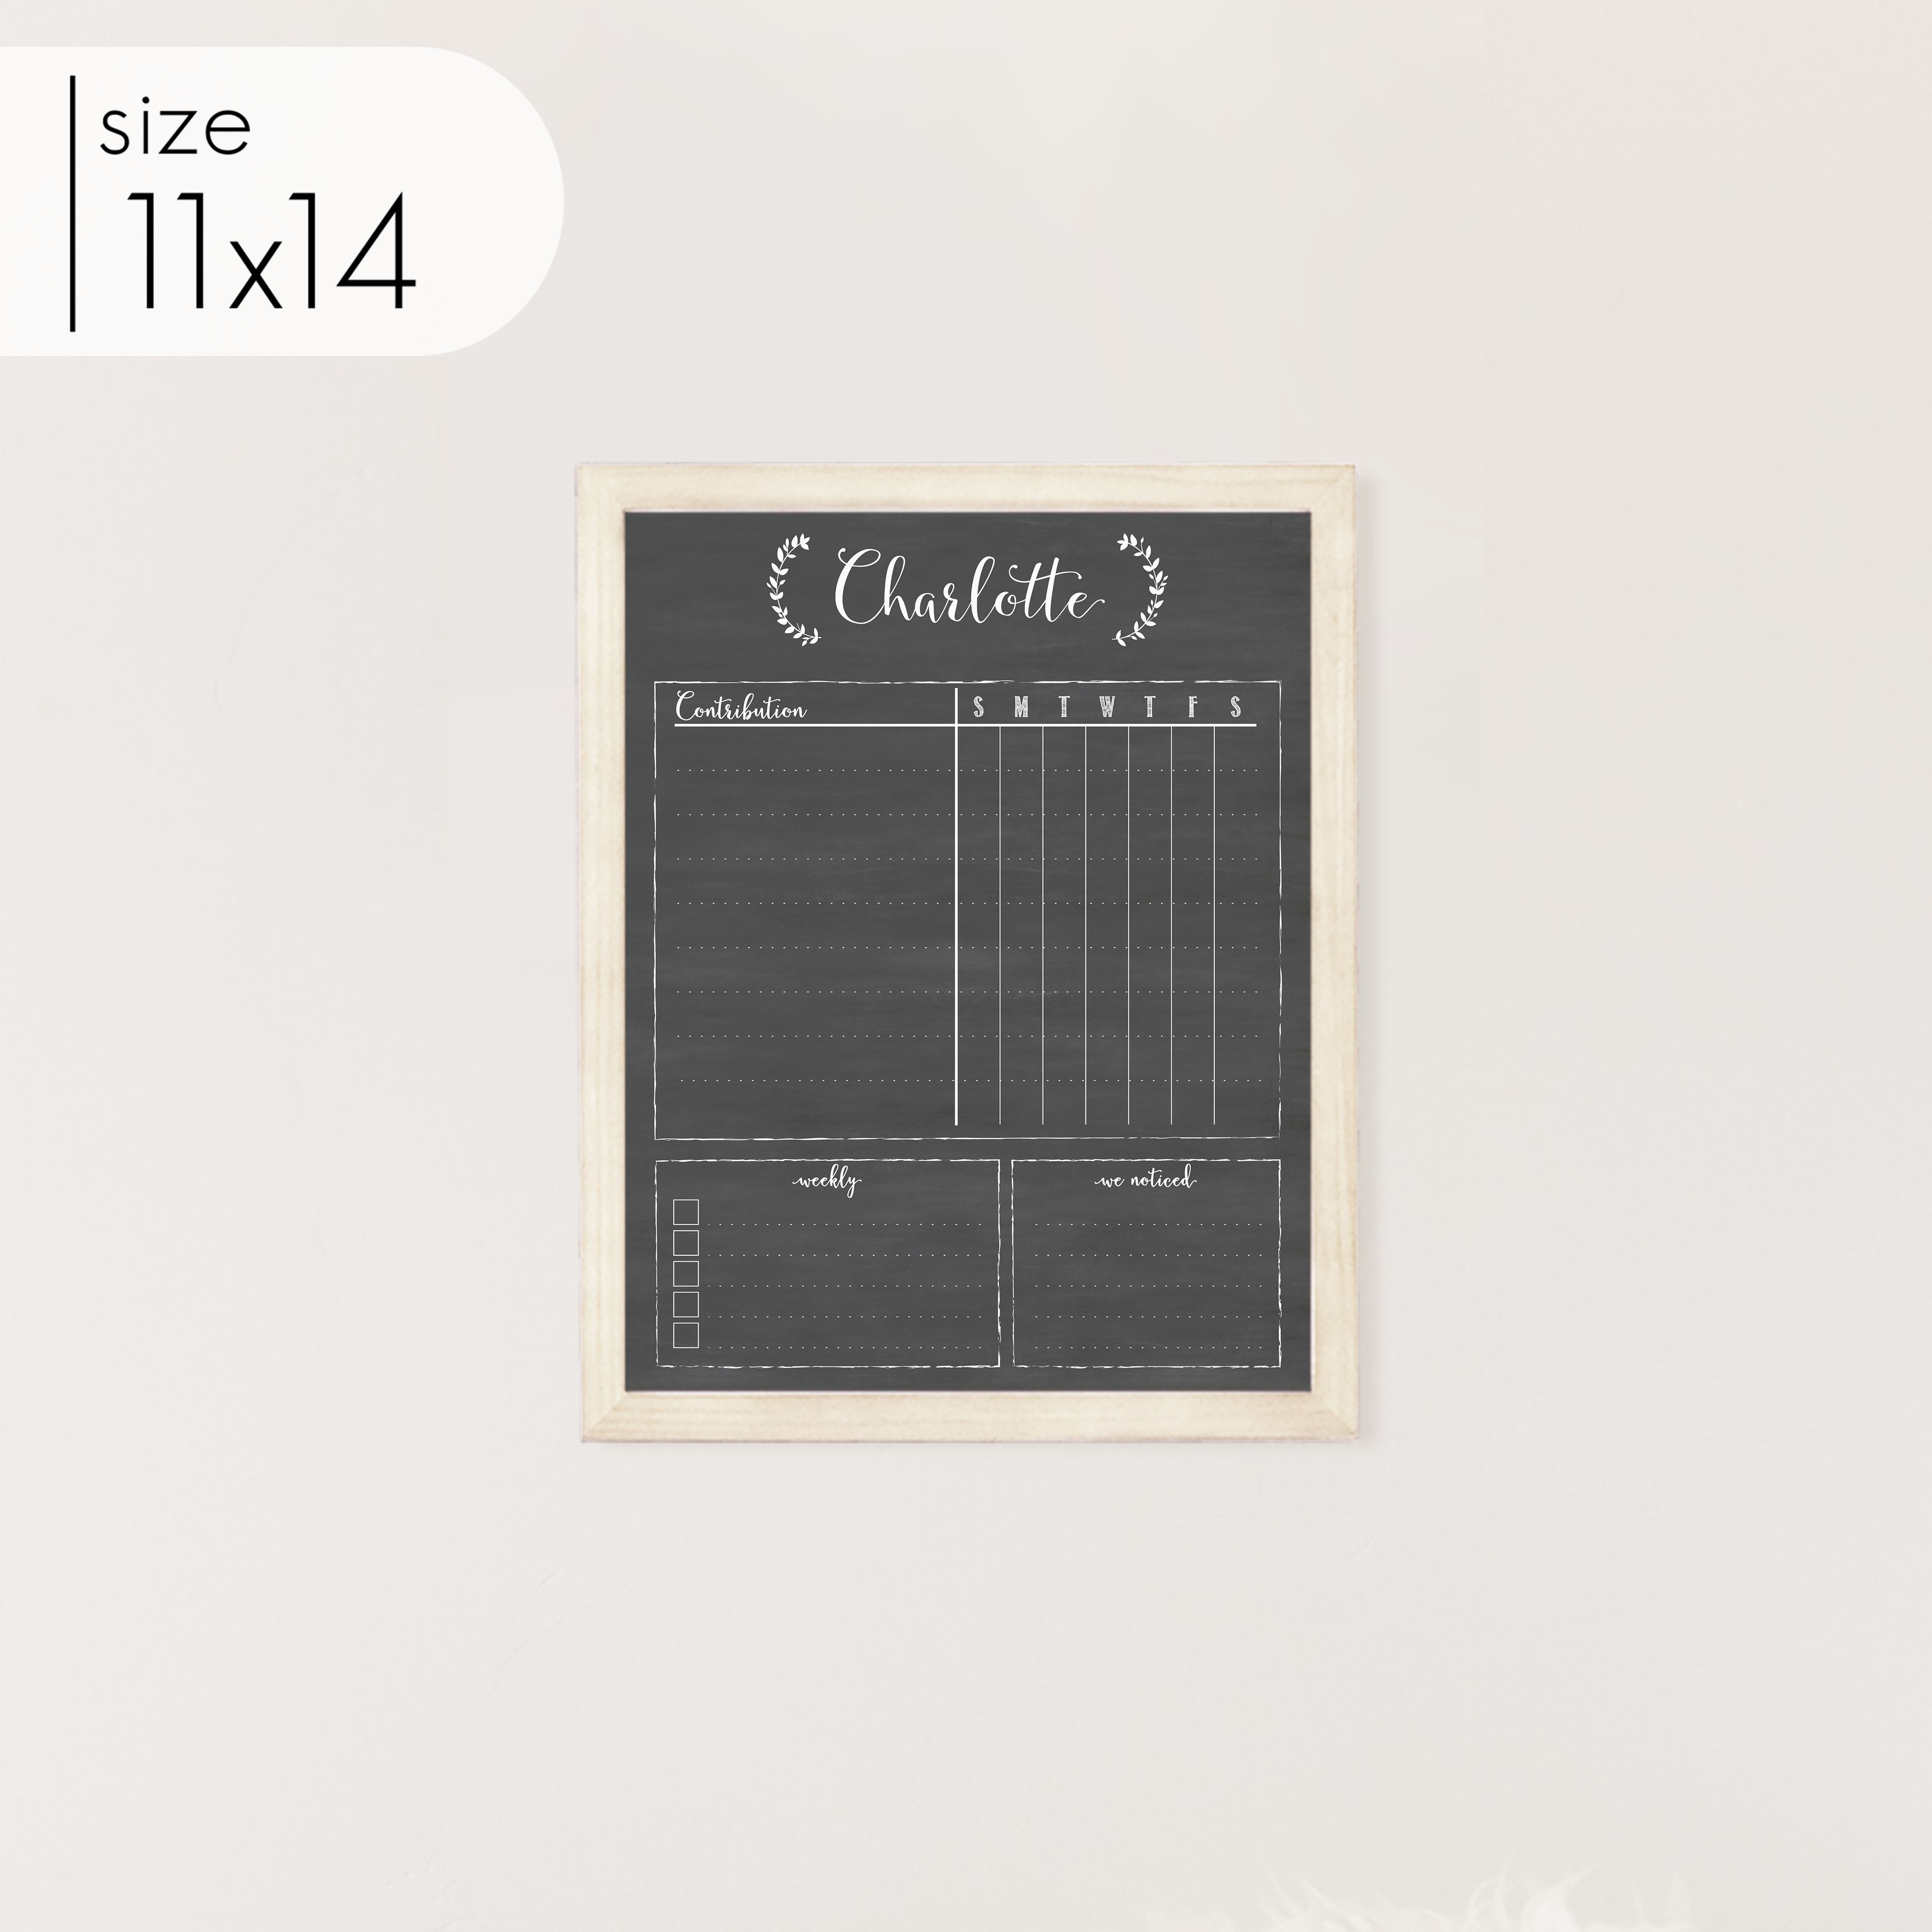 1 Person Framed Chalkboard Chore Chart  | Vertical Eagleton